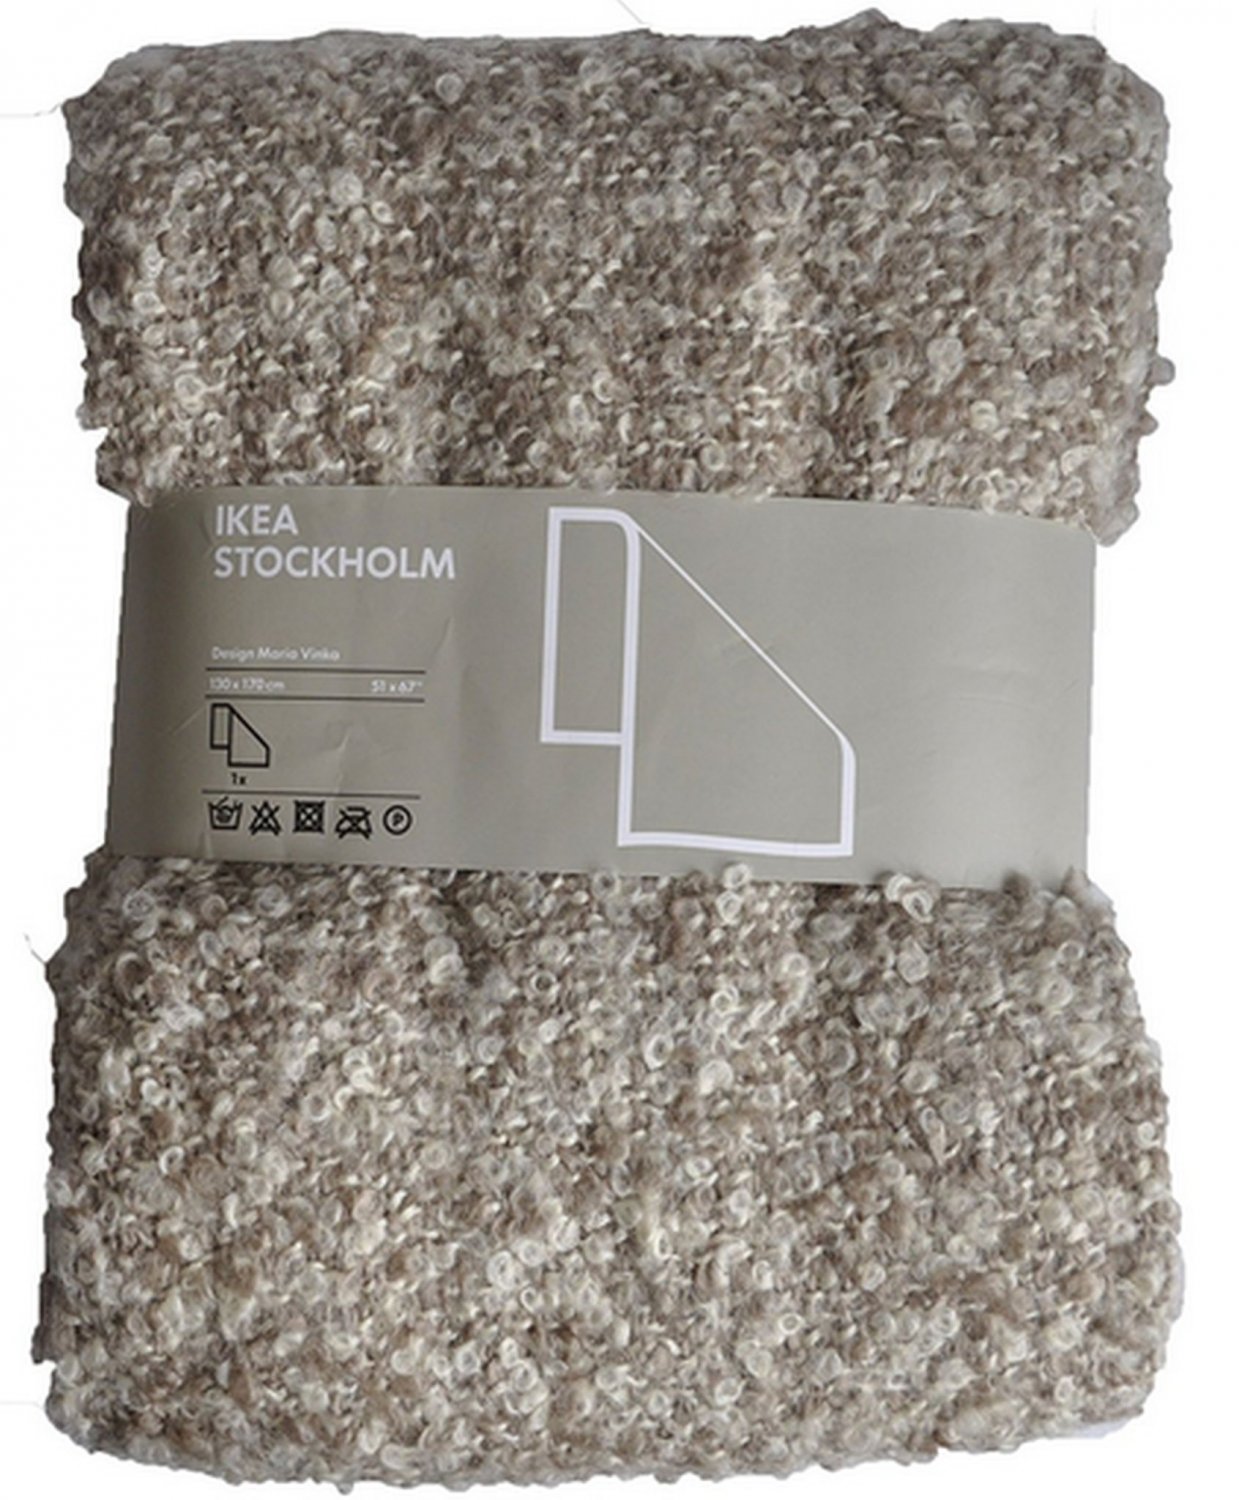 IKEA Stockholm Throw BLANKET Beige Mohair Acrylic Wool Photo PROP ...